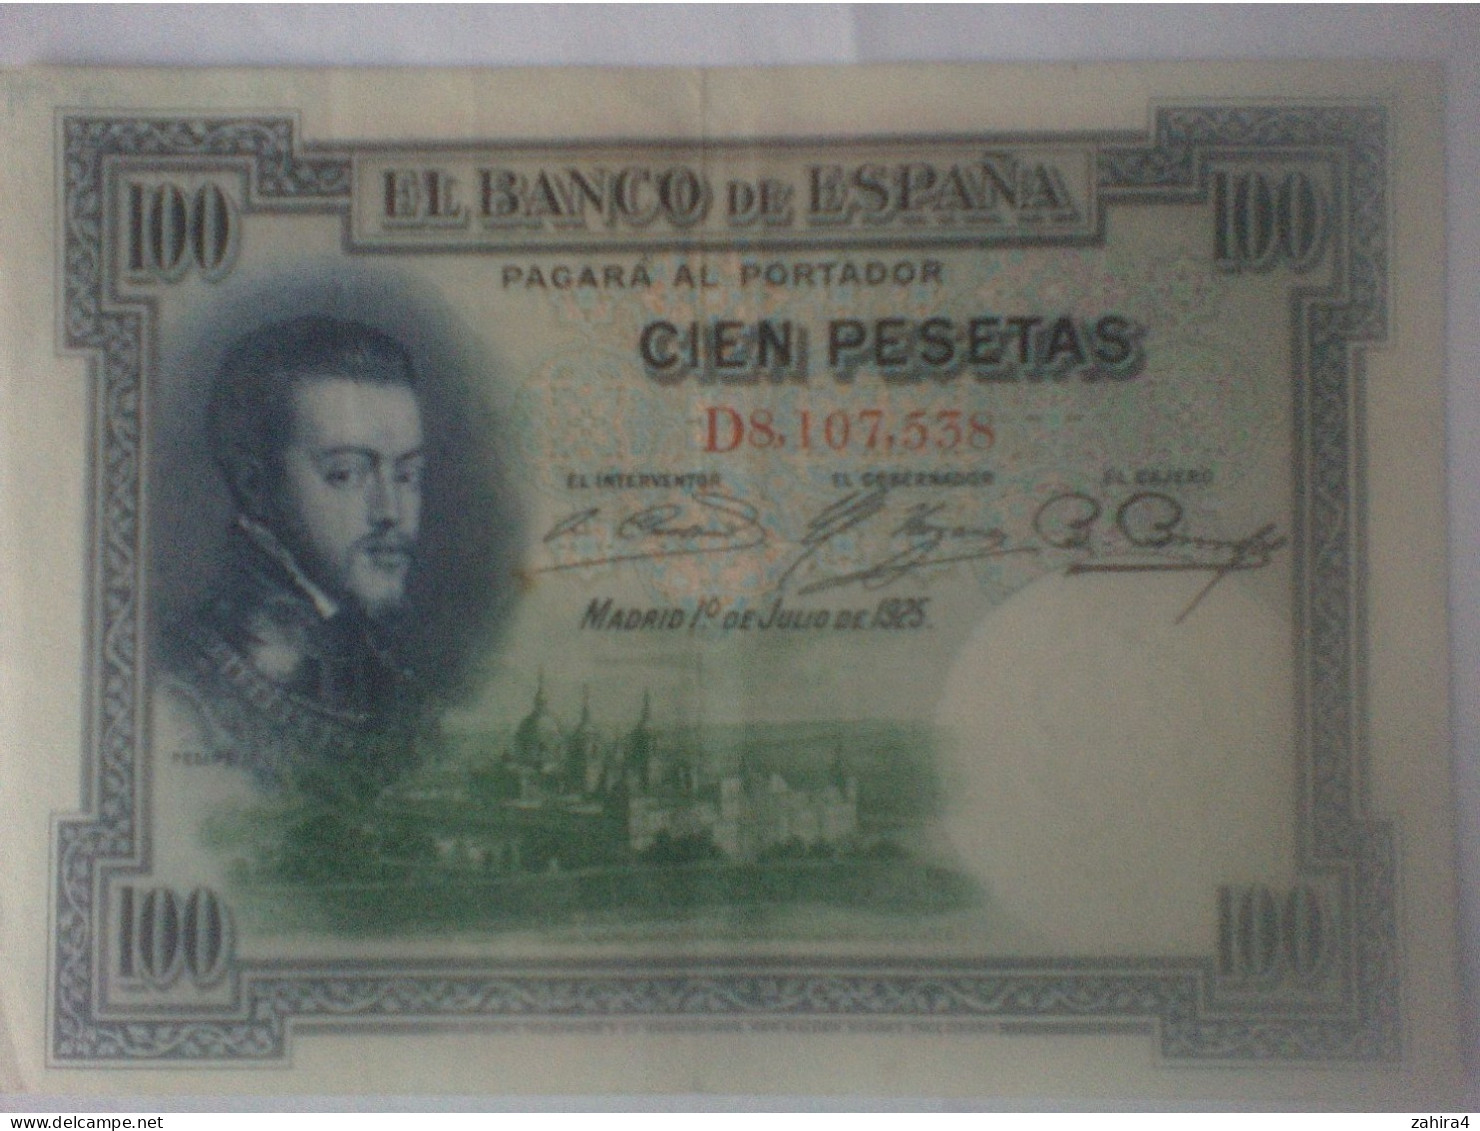 Felipe II - 100 Pesetas - Madrid 1° Julio 1925 - D8,107,538 - 100 Peseten